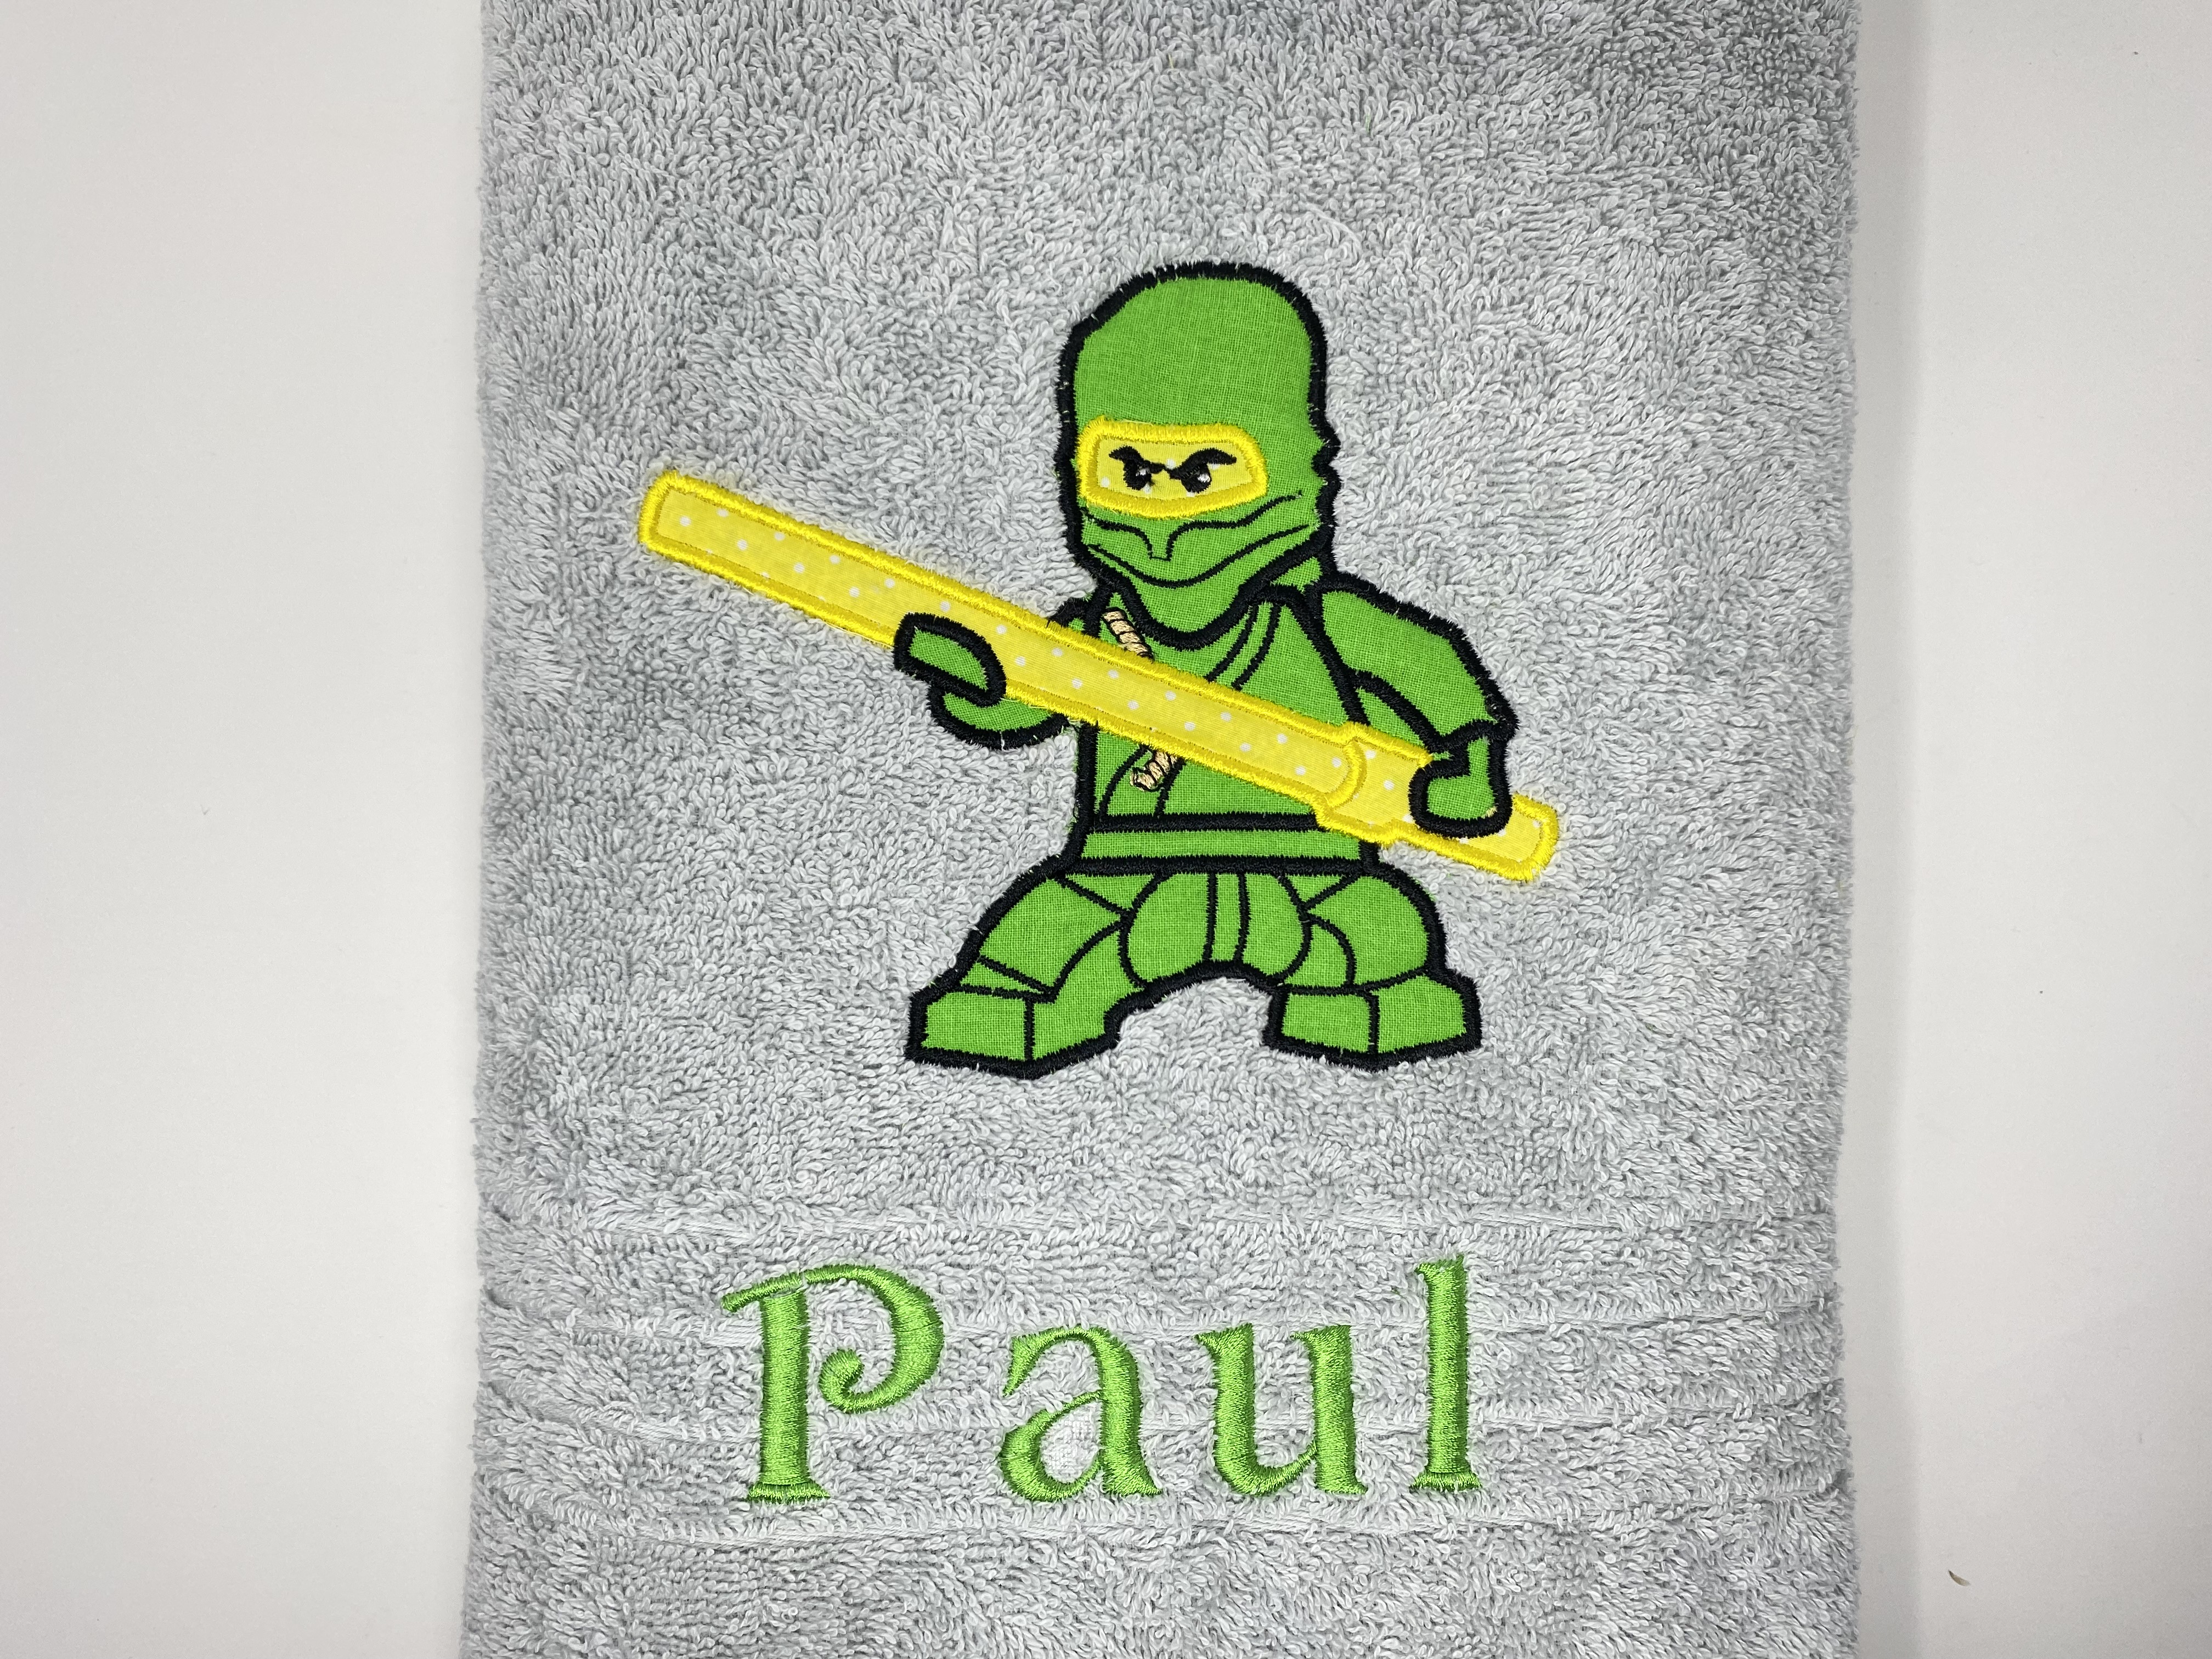 NINJA Grün Handtuch Duschtuch bestickt & personalisierbar Super Qualität